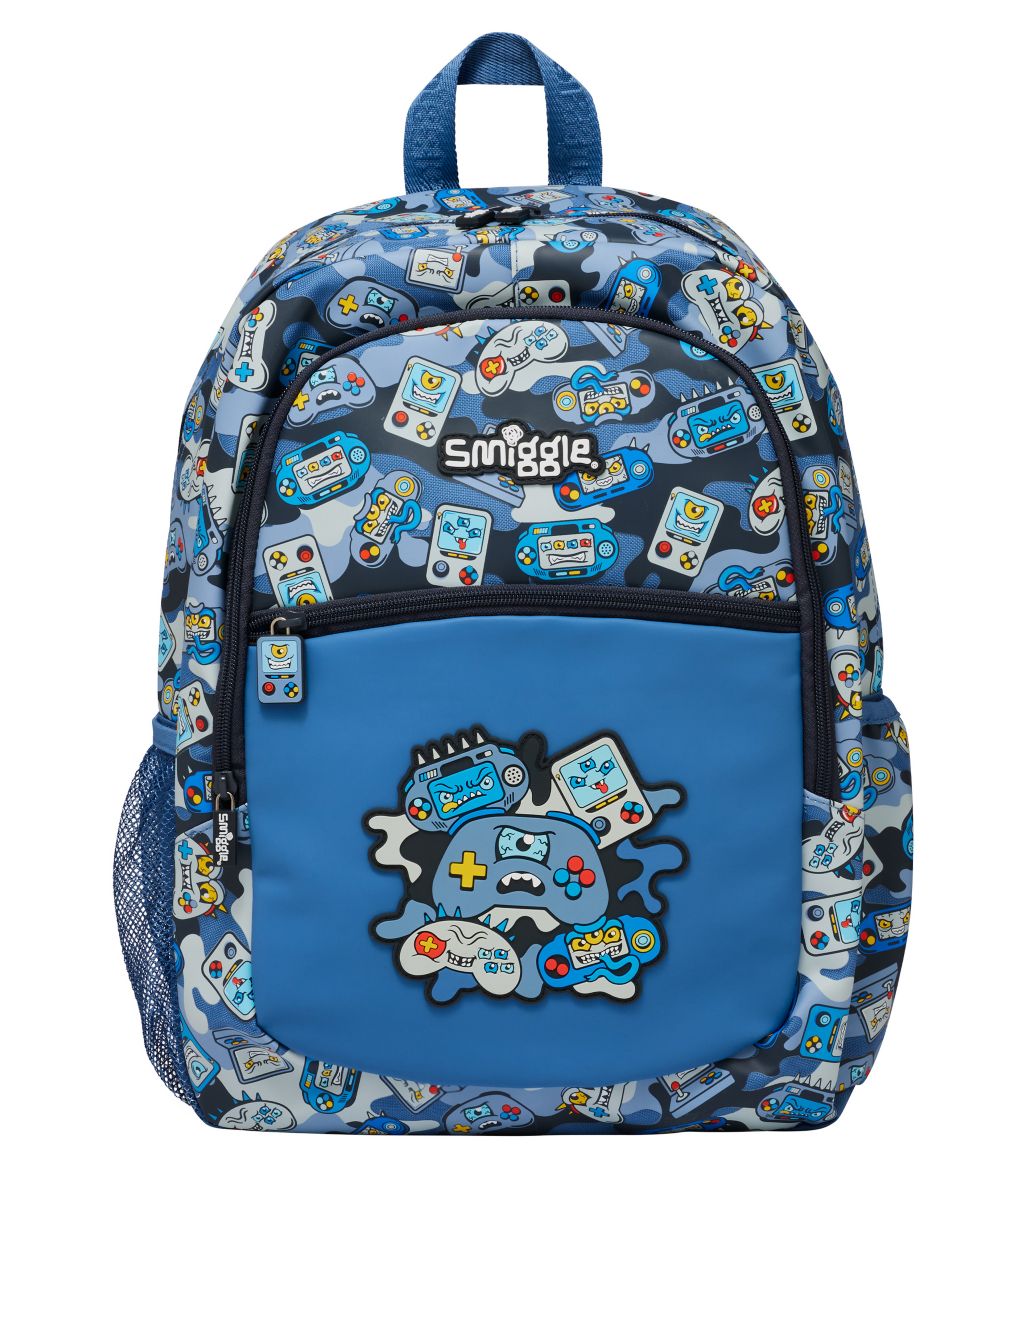 Kids' Gaming Backpack image 1